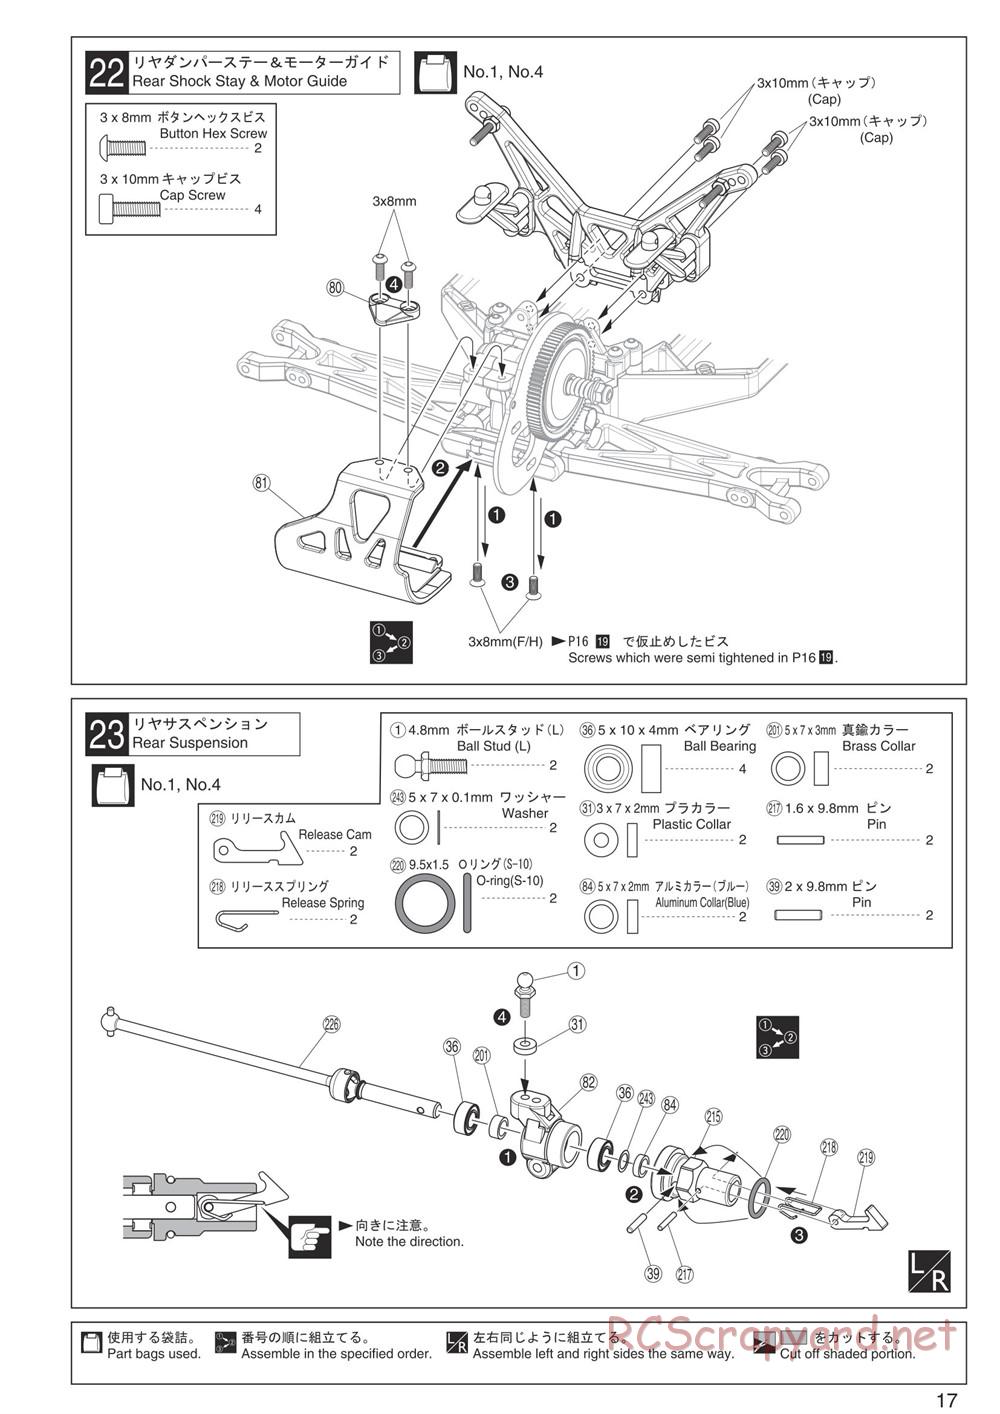 Kyosho - Ultima RT5 - Manual - Page 17